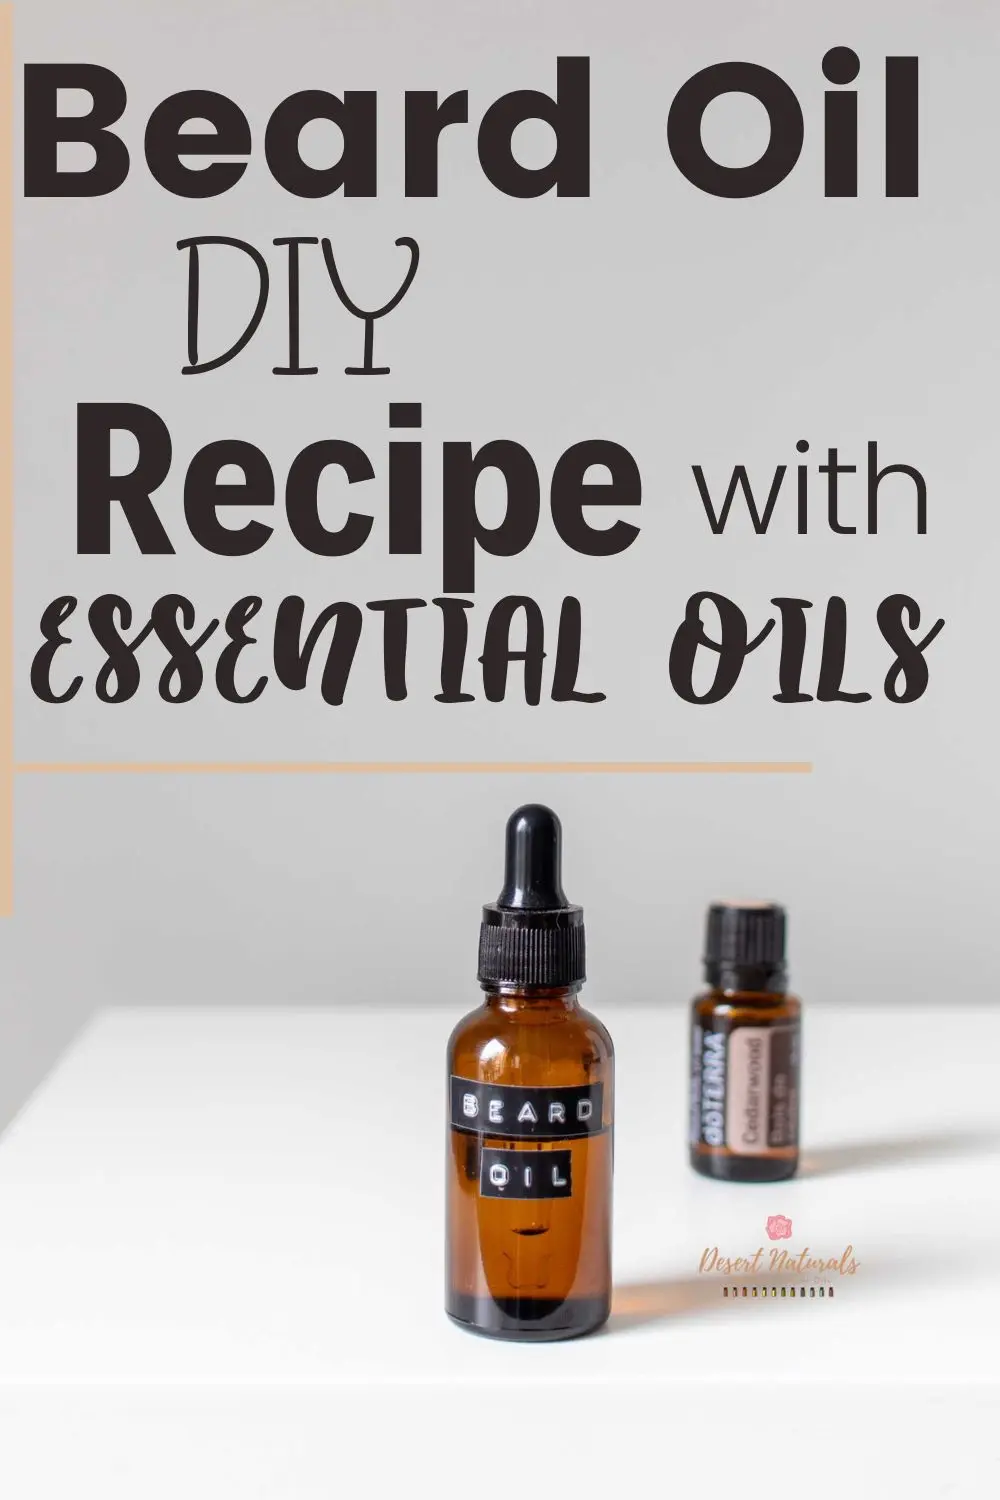 DIY Beard Oil Recipe with essential oils pt